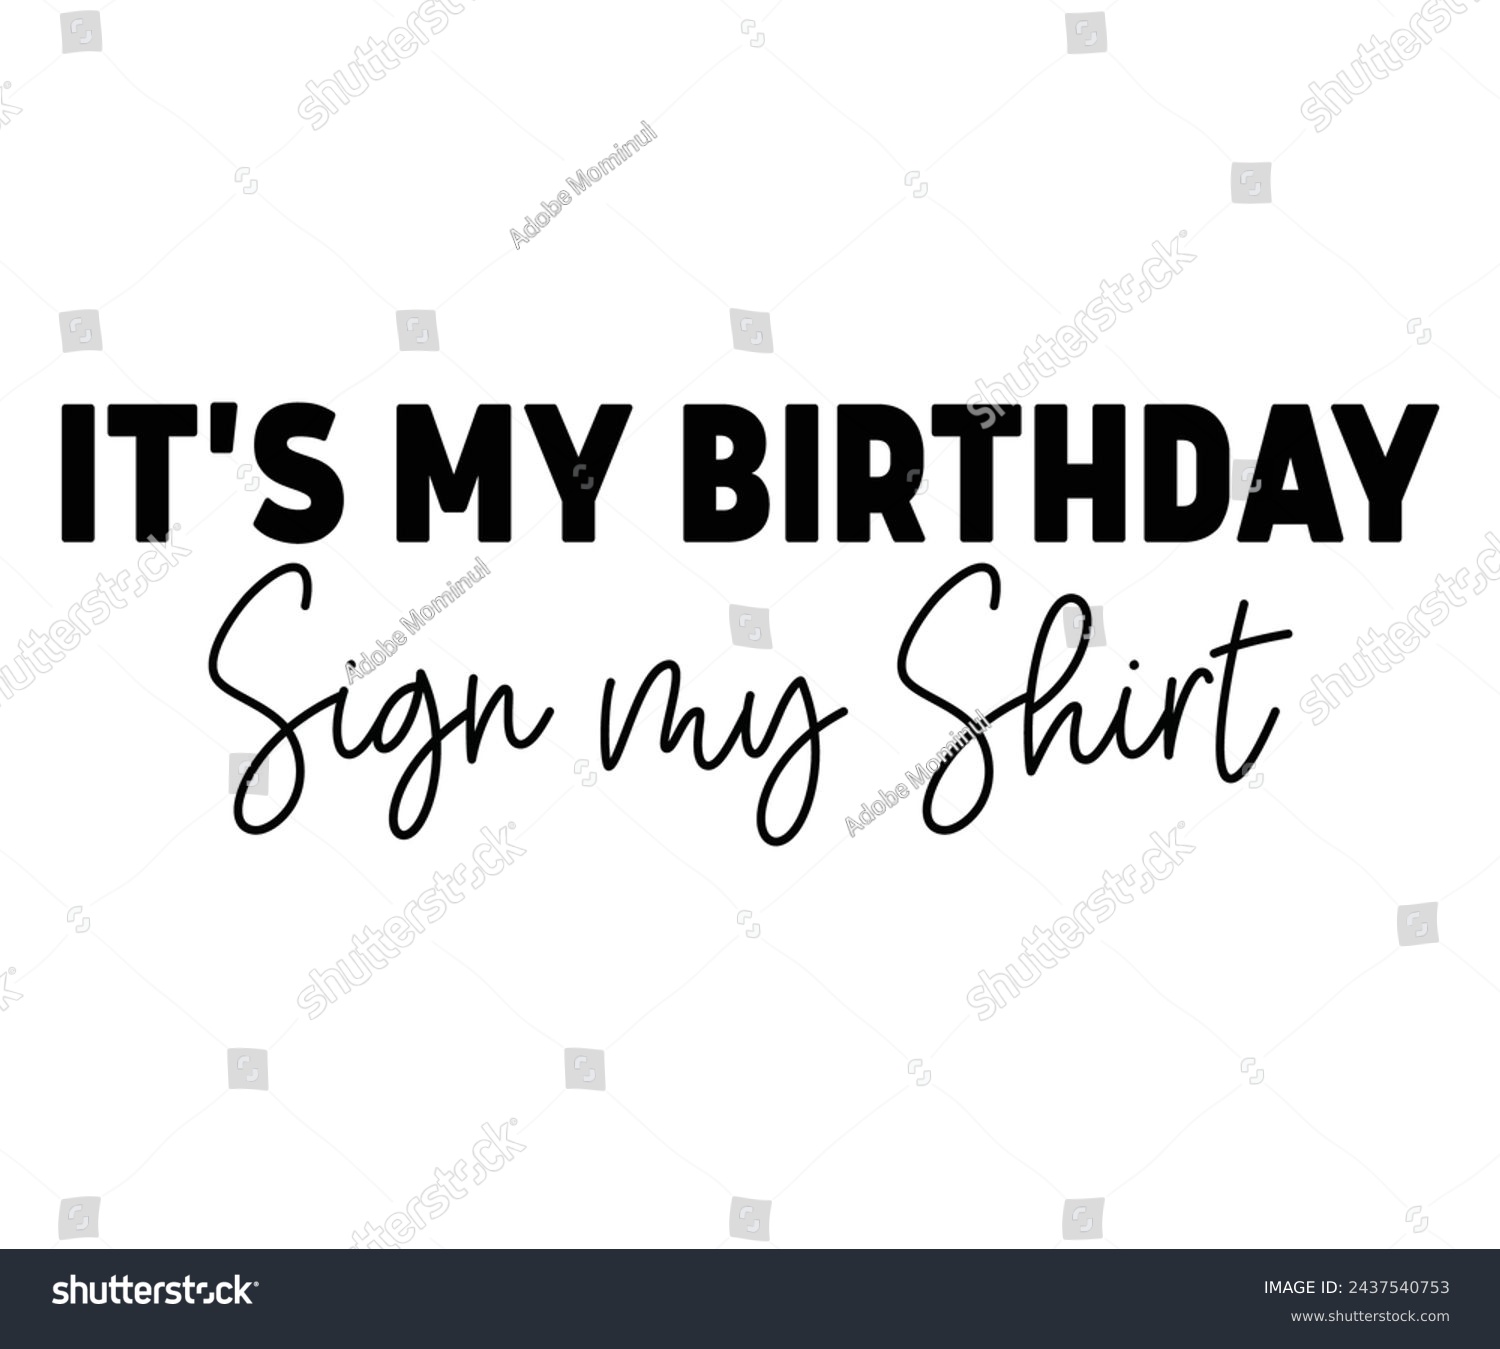 SVG of It's My Birthday Sign My Shirt,Birthday Svg,Birthday Quotes,Birthday Gift Svg,Birthday Shirt,Happy Birthday Svg,T-shirt,Birthday Girl Svg,Cut file, svg